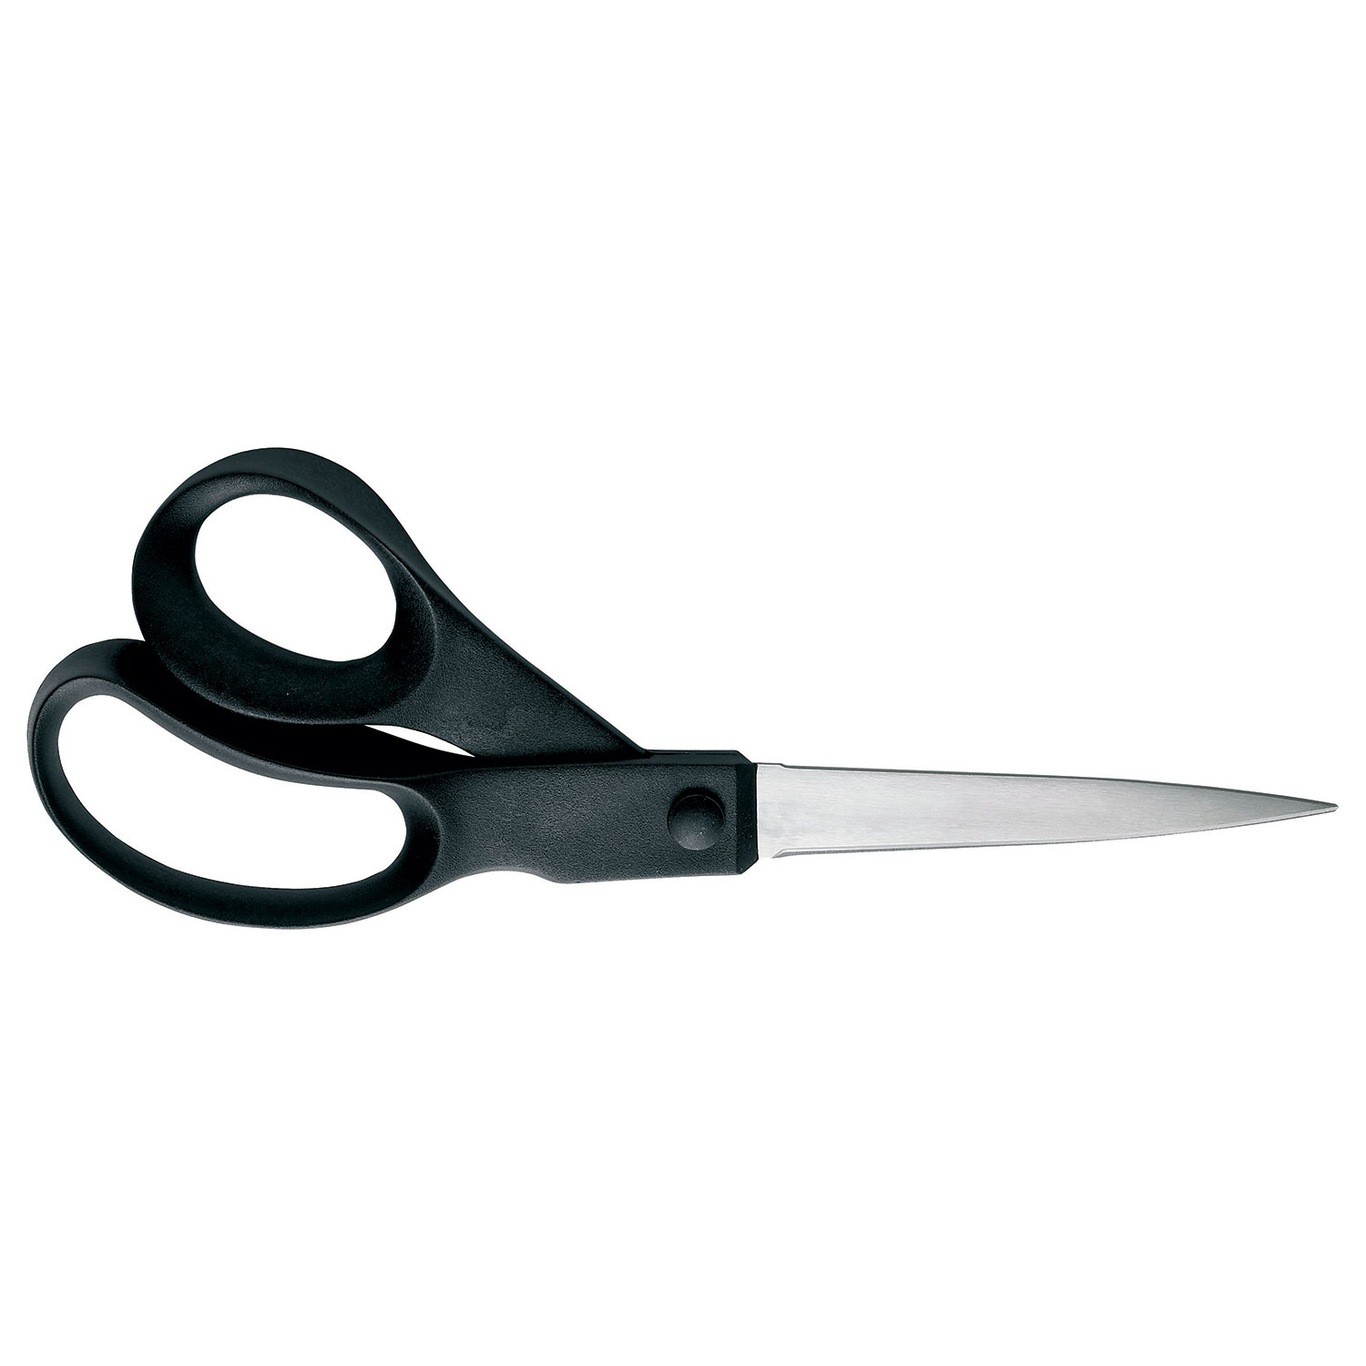 https://royaldesign.com/image/2/fiskars-essential-universal-scissors-21-cm-0?w=800&quality=80